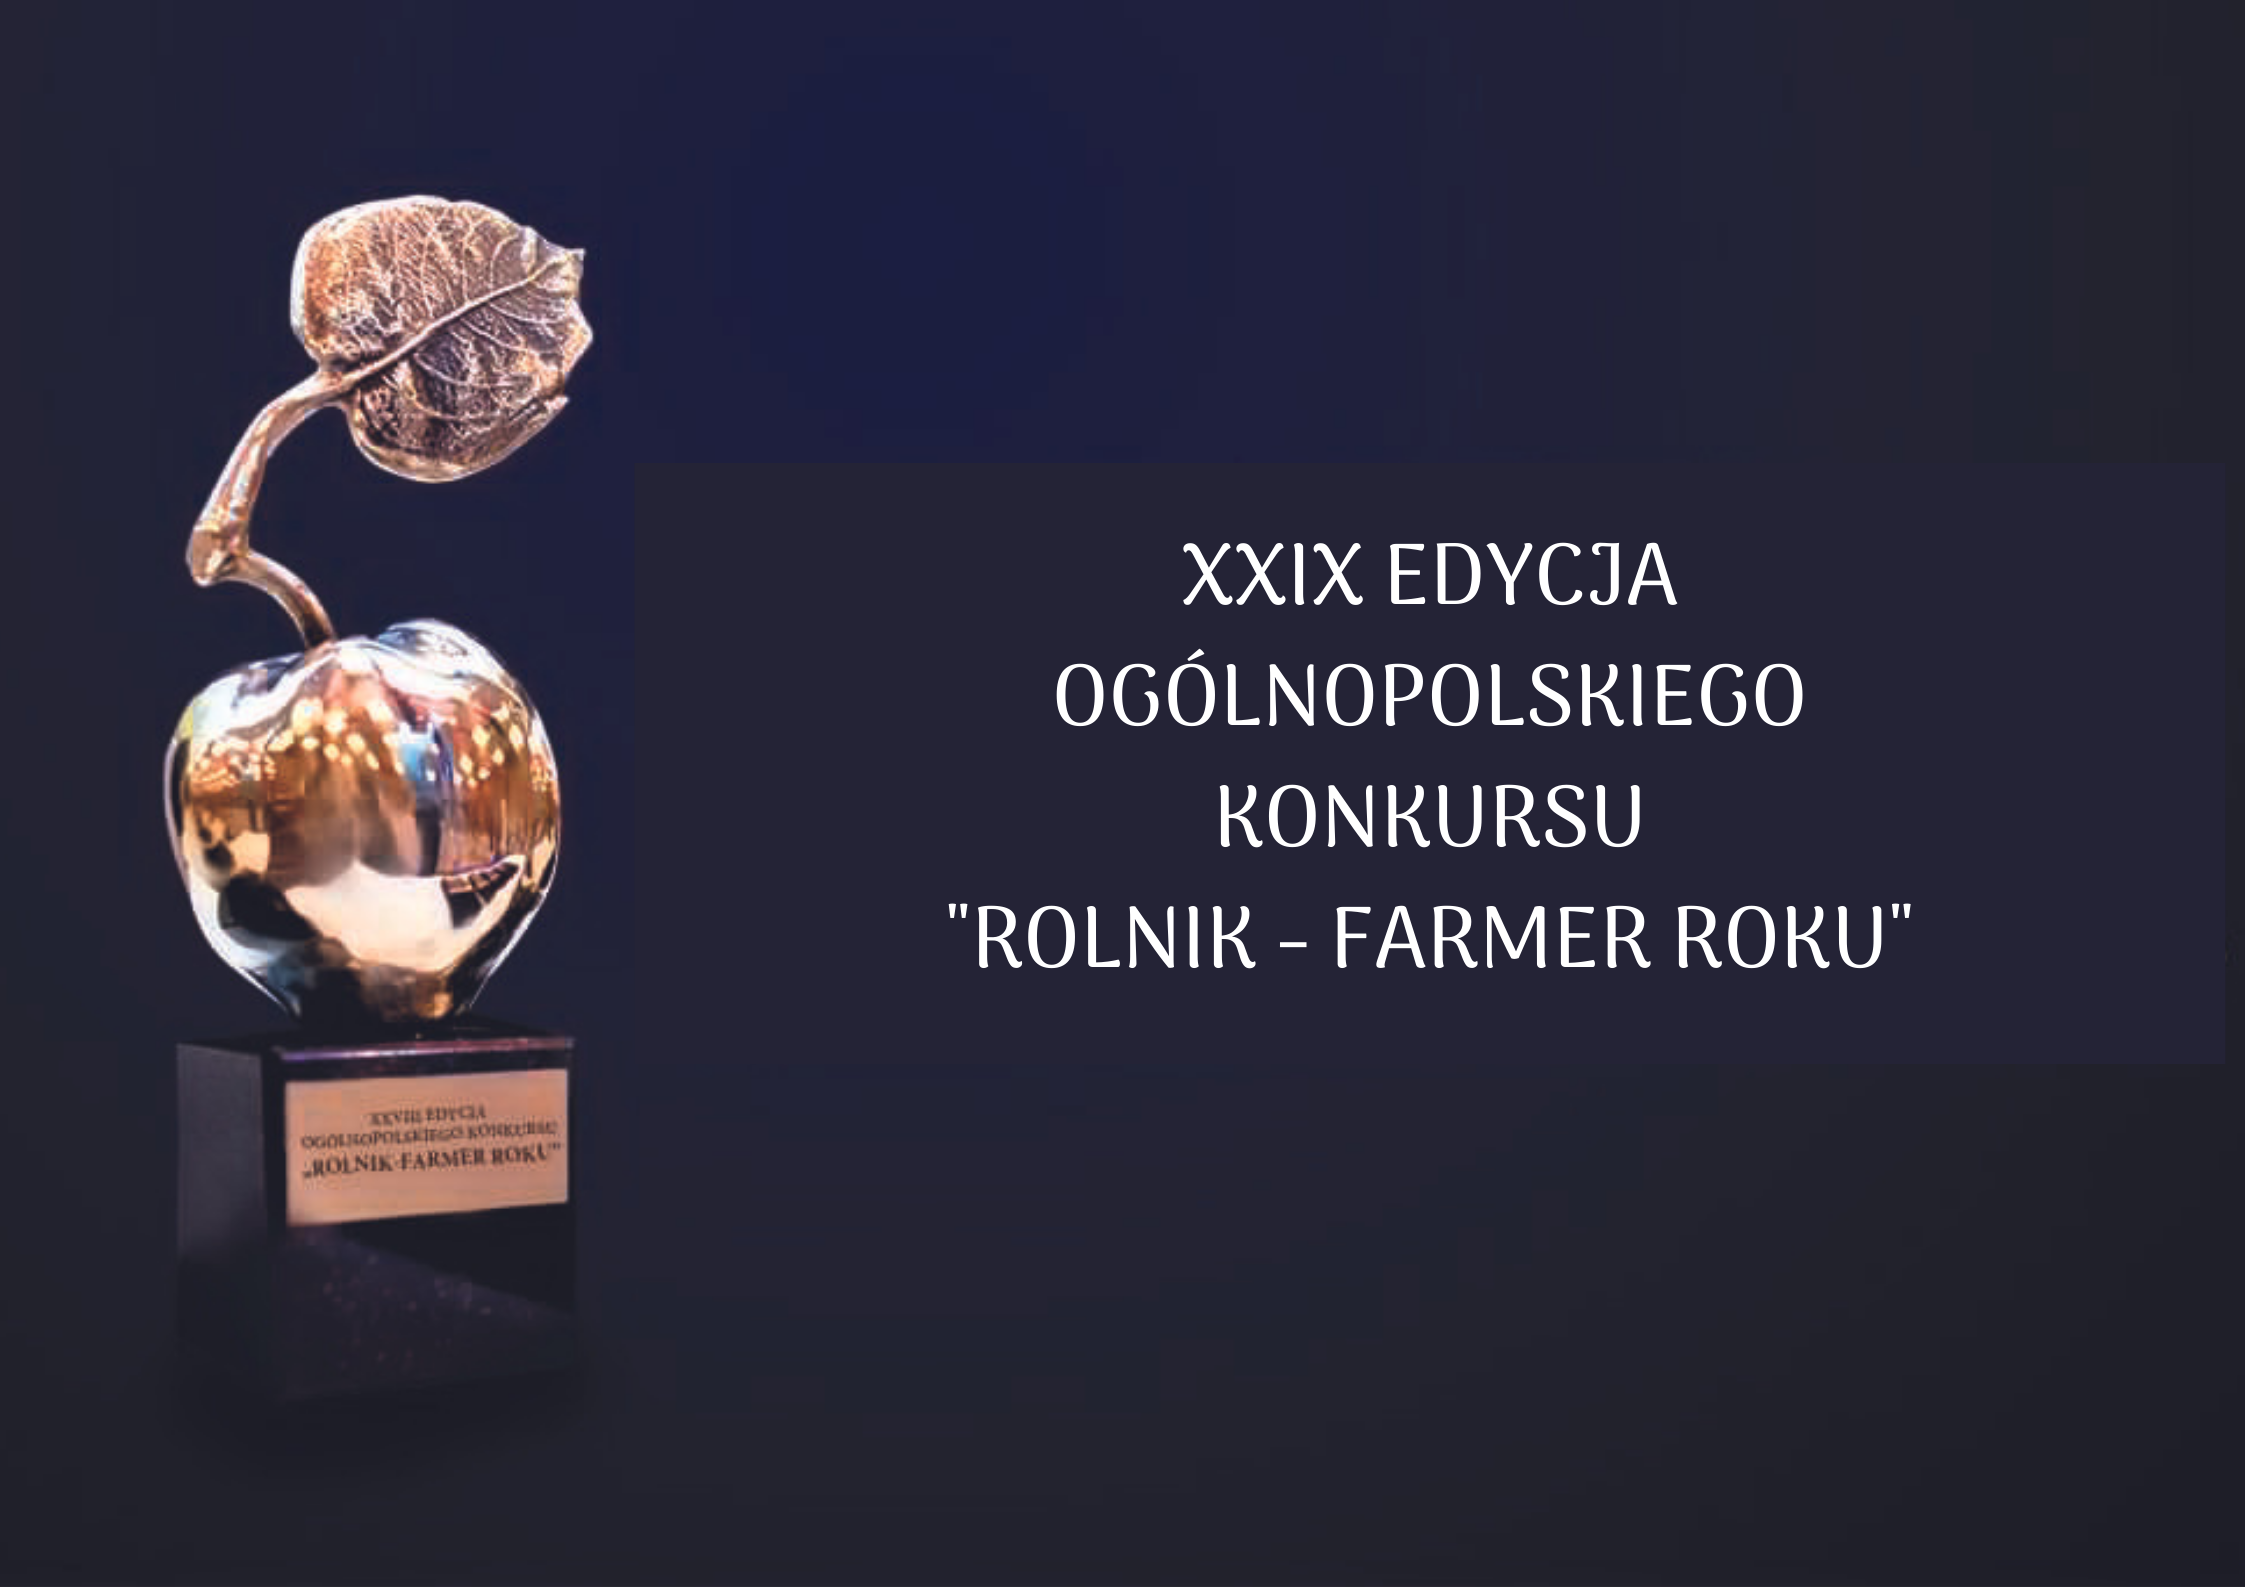 Konkurs "Rolnik - Farmer Roku"